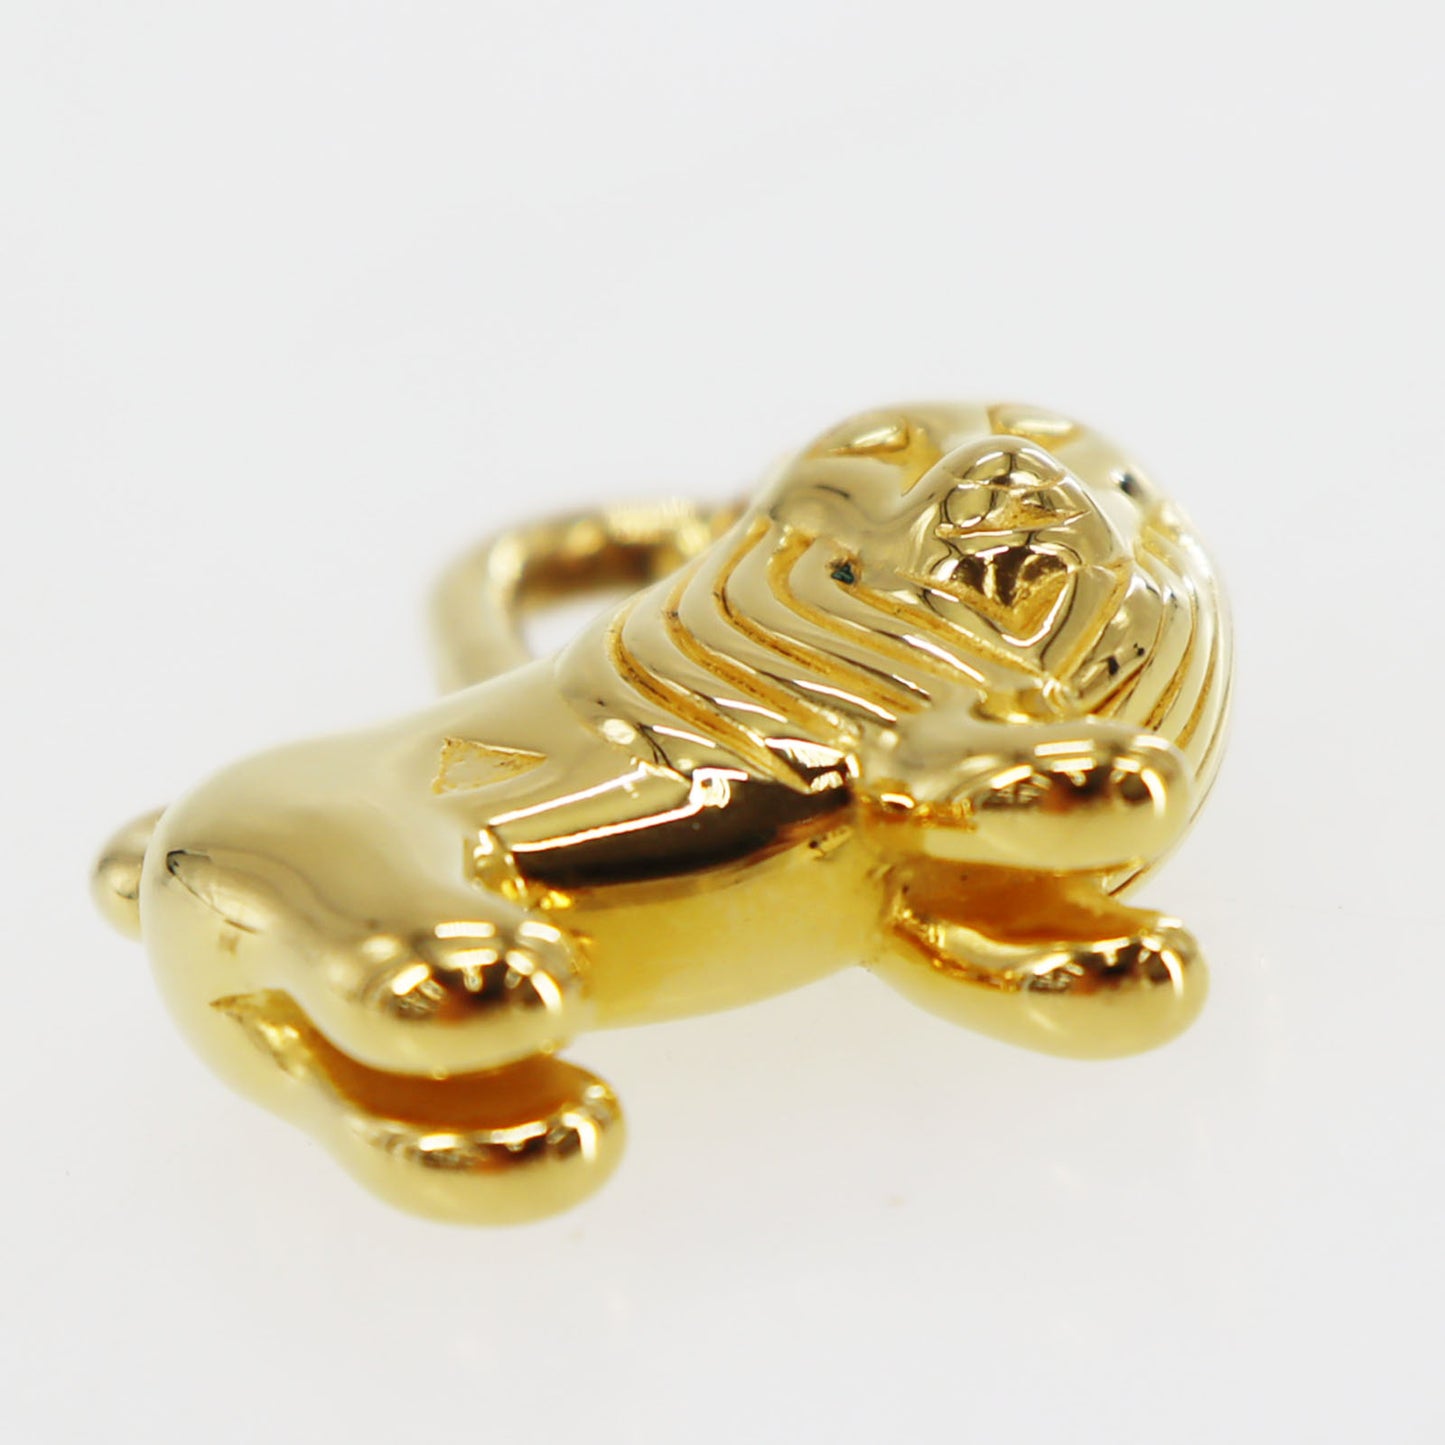 HERMES Lion Motif Charm Top Cadena Gold Plated #CR160